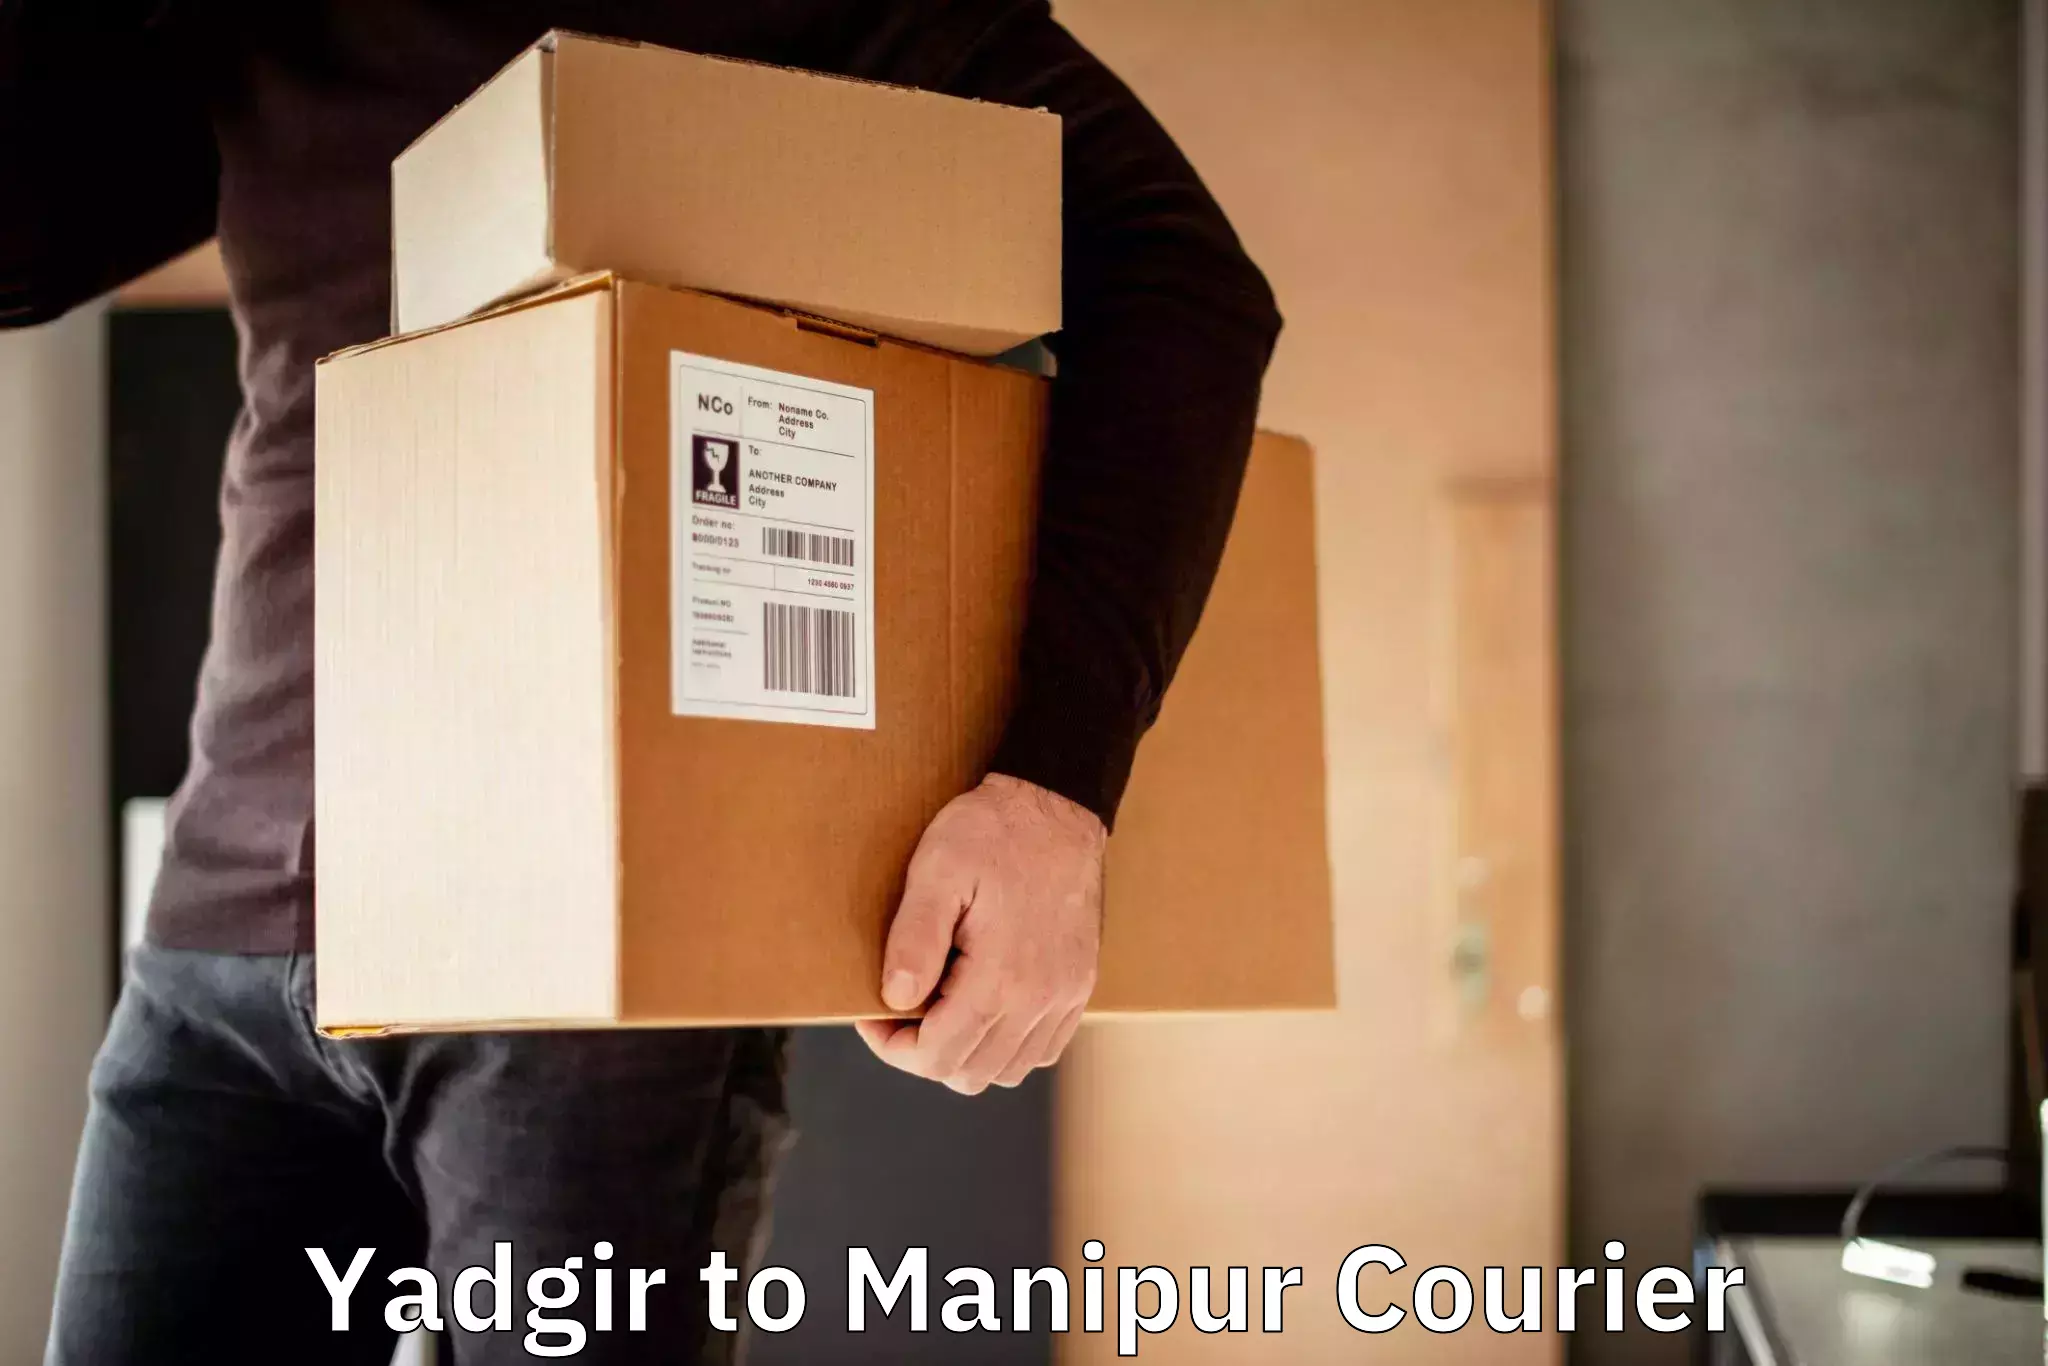 Digital courier platforms Yadgir to Imphal